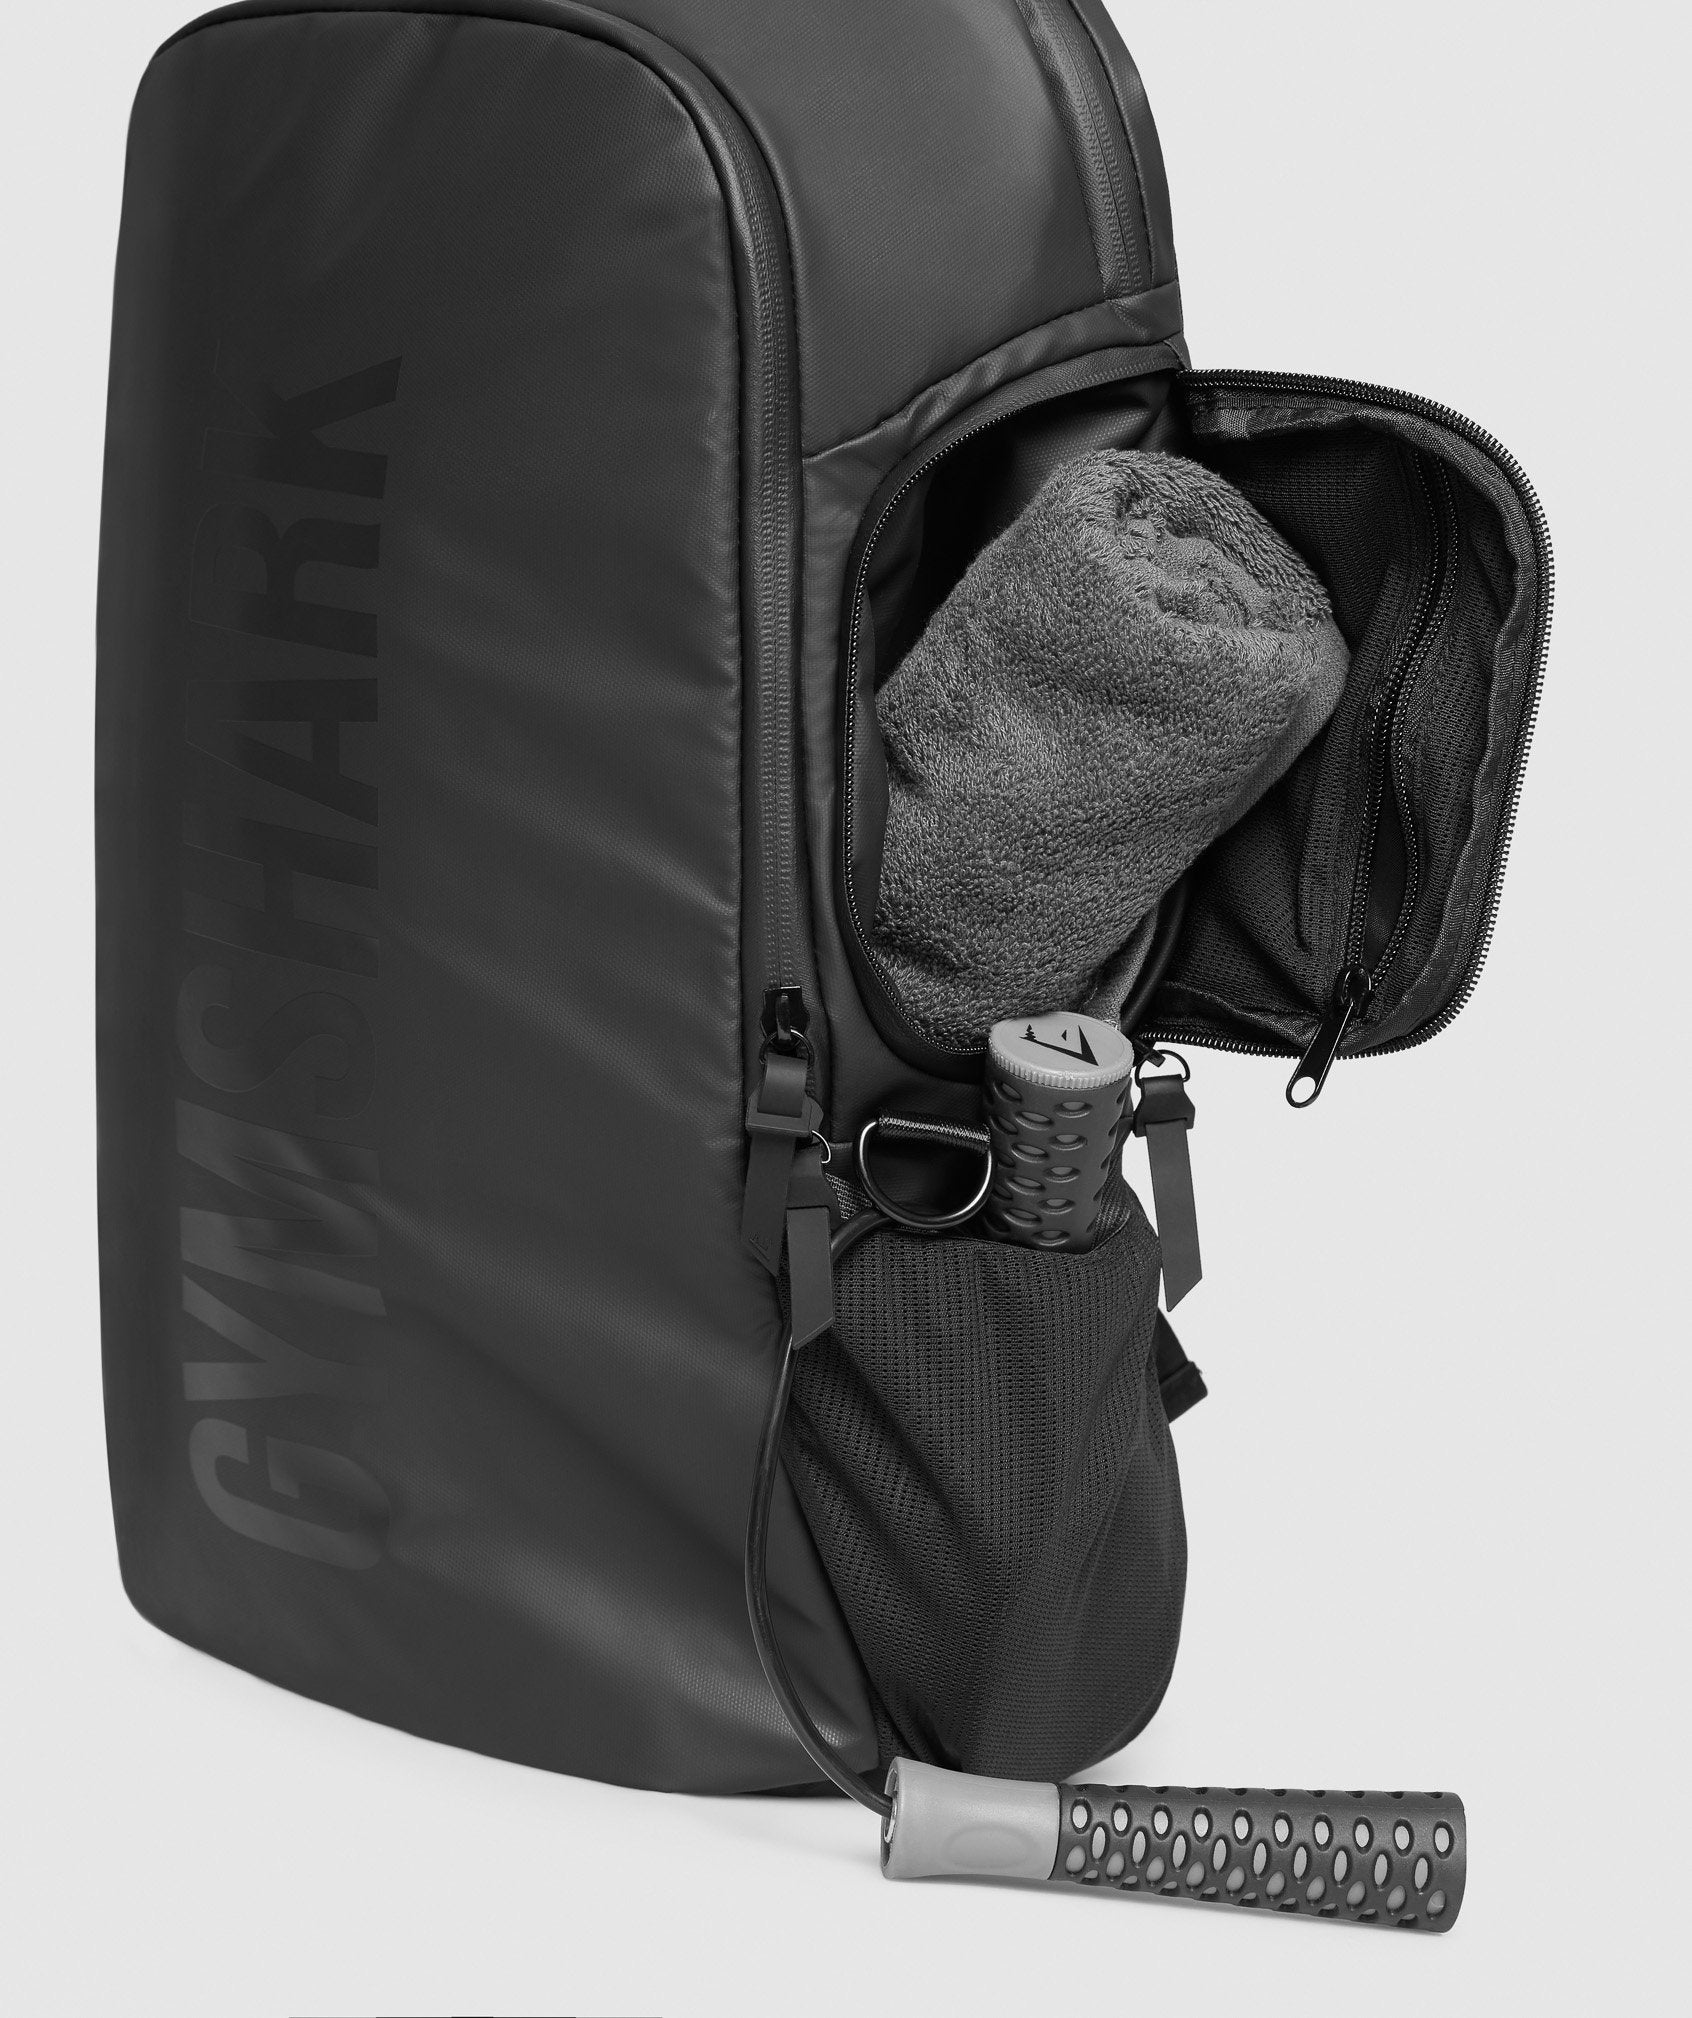 X Series Backpack 0.2 in Black - view 5